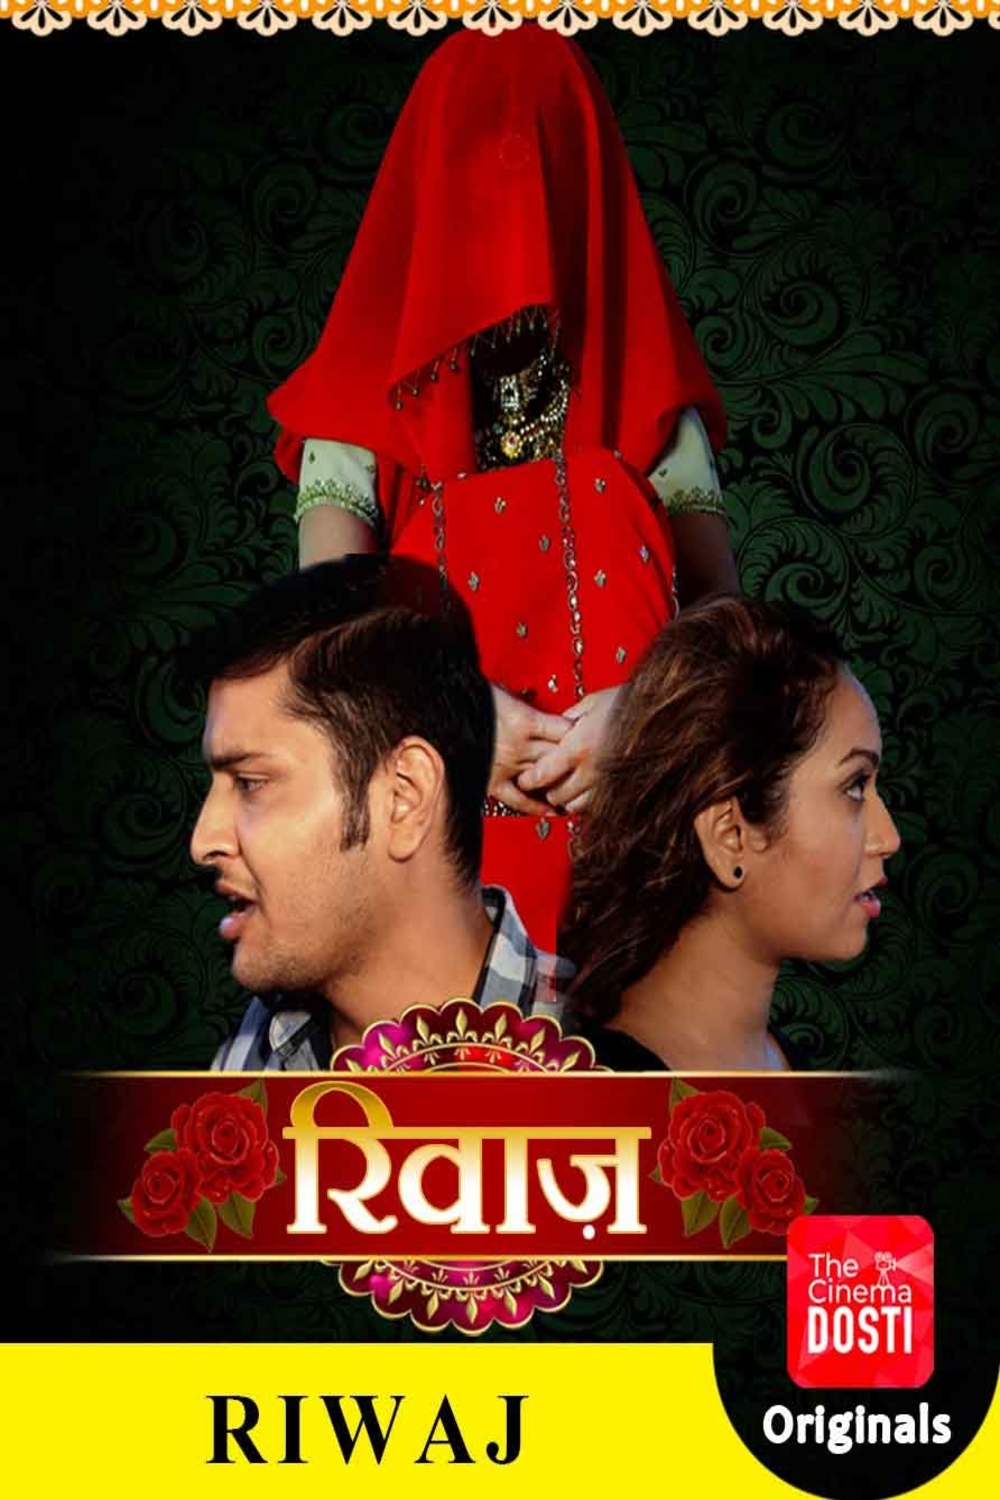 twilight full movie in hindi 720 p download bollywap